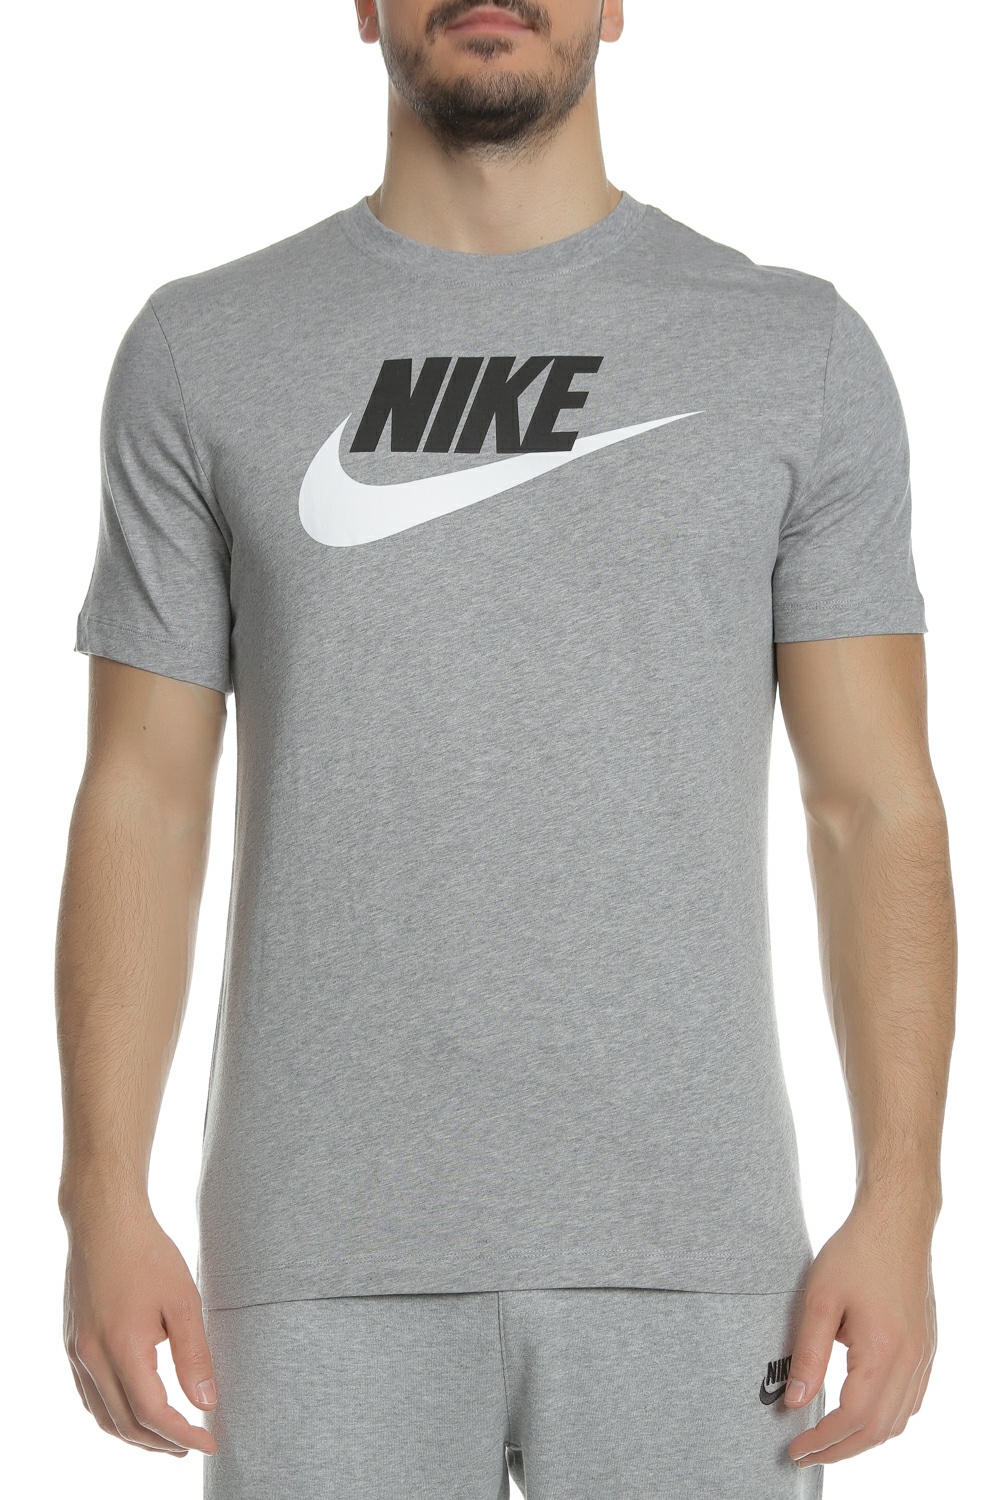 NIKE – Ανδρικό t-shirt NIKE SPORTSWEAR ICON FUTURA γκρι 1690085.1-G471